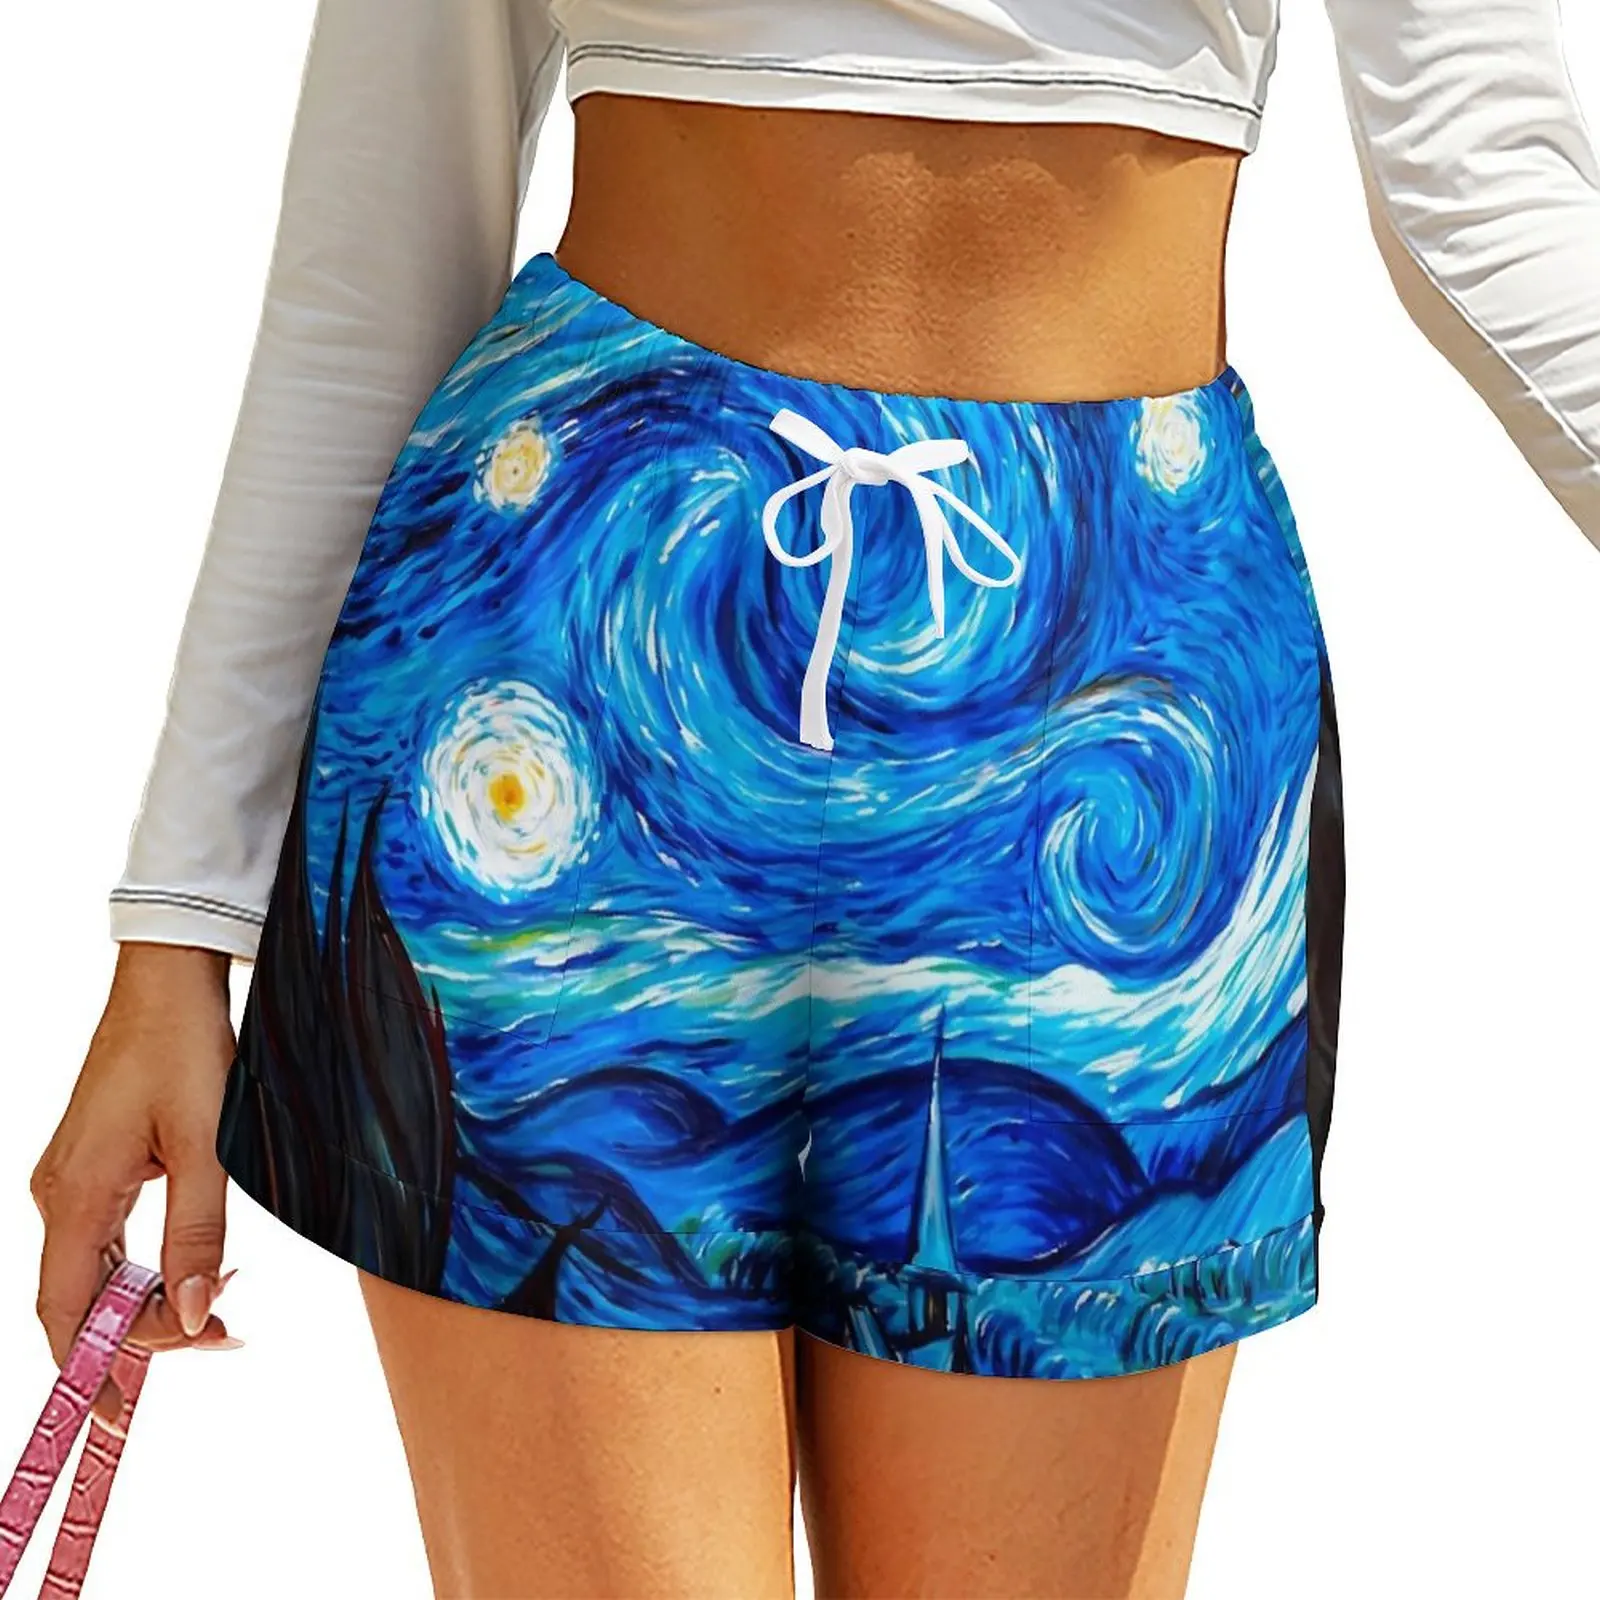 

Classic Starry Night Shorts Women Vincent Van Gogh Street Style Printed Shorts Elastic Waist Oversized Short Pants Beach Bottoms